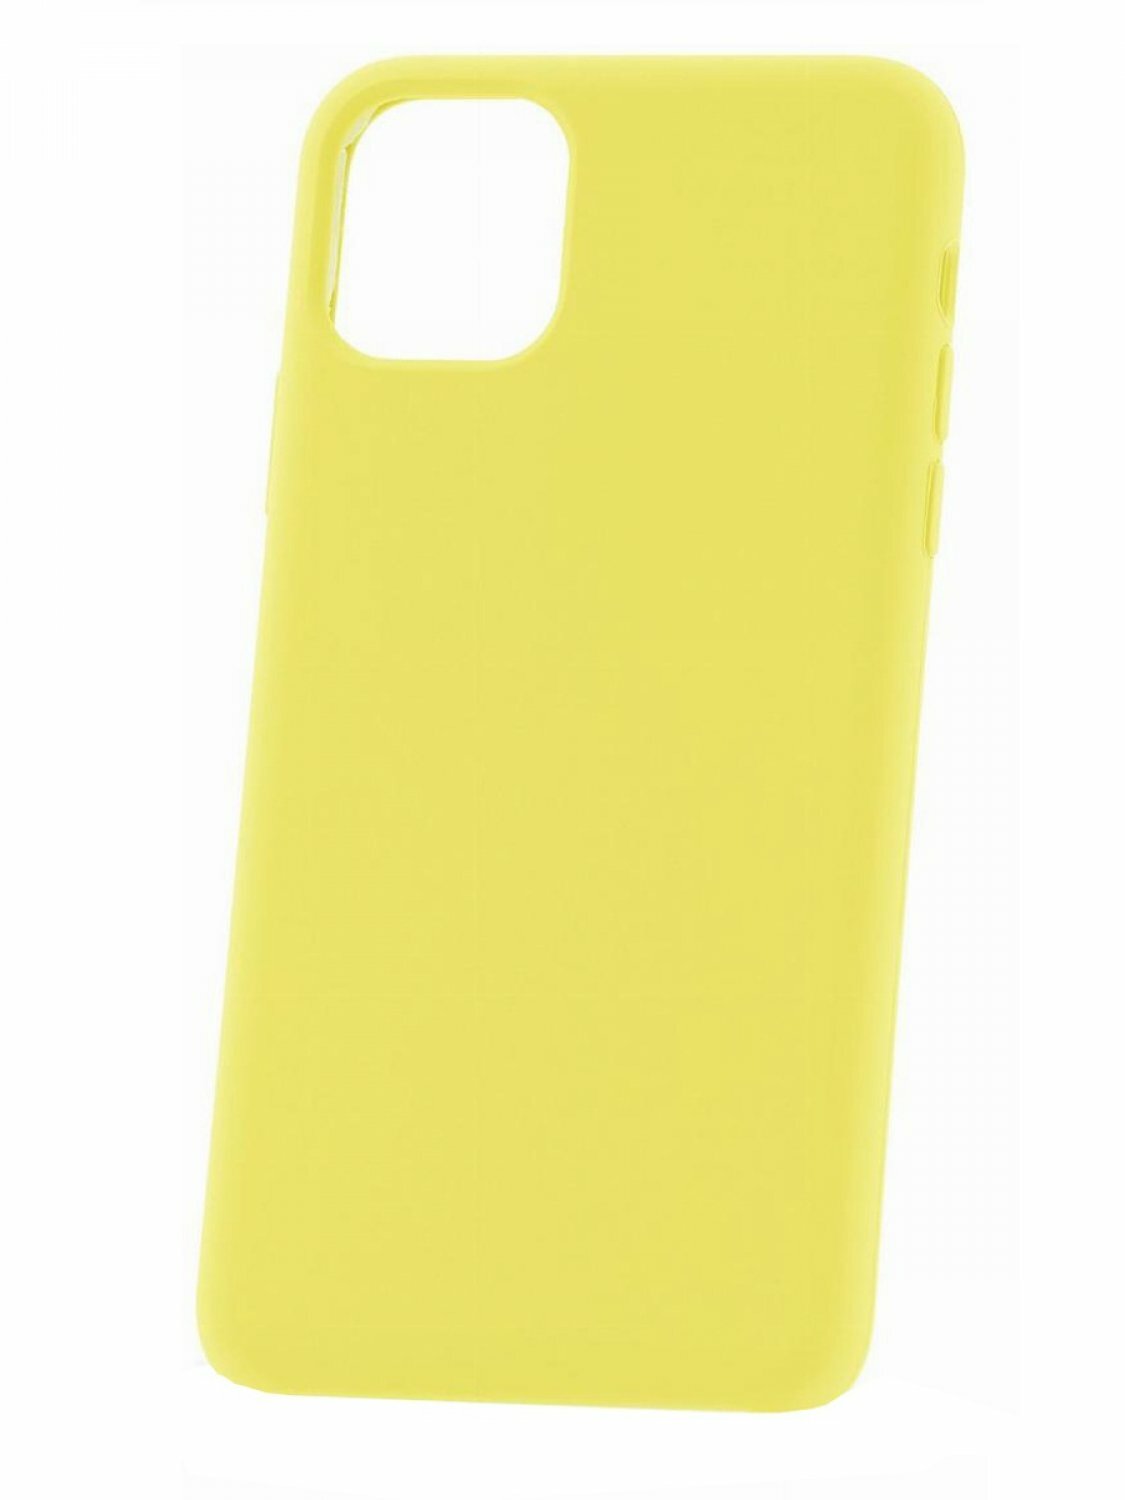 Чехол для iPhone 11 Pro Max Derbi Slim Silicone-2 желтый